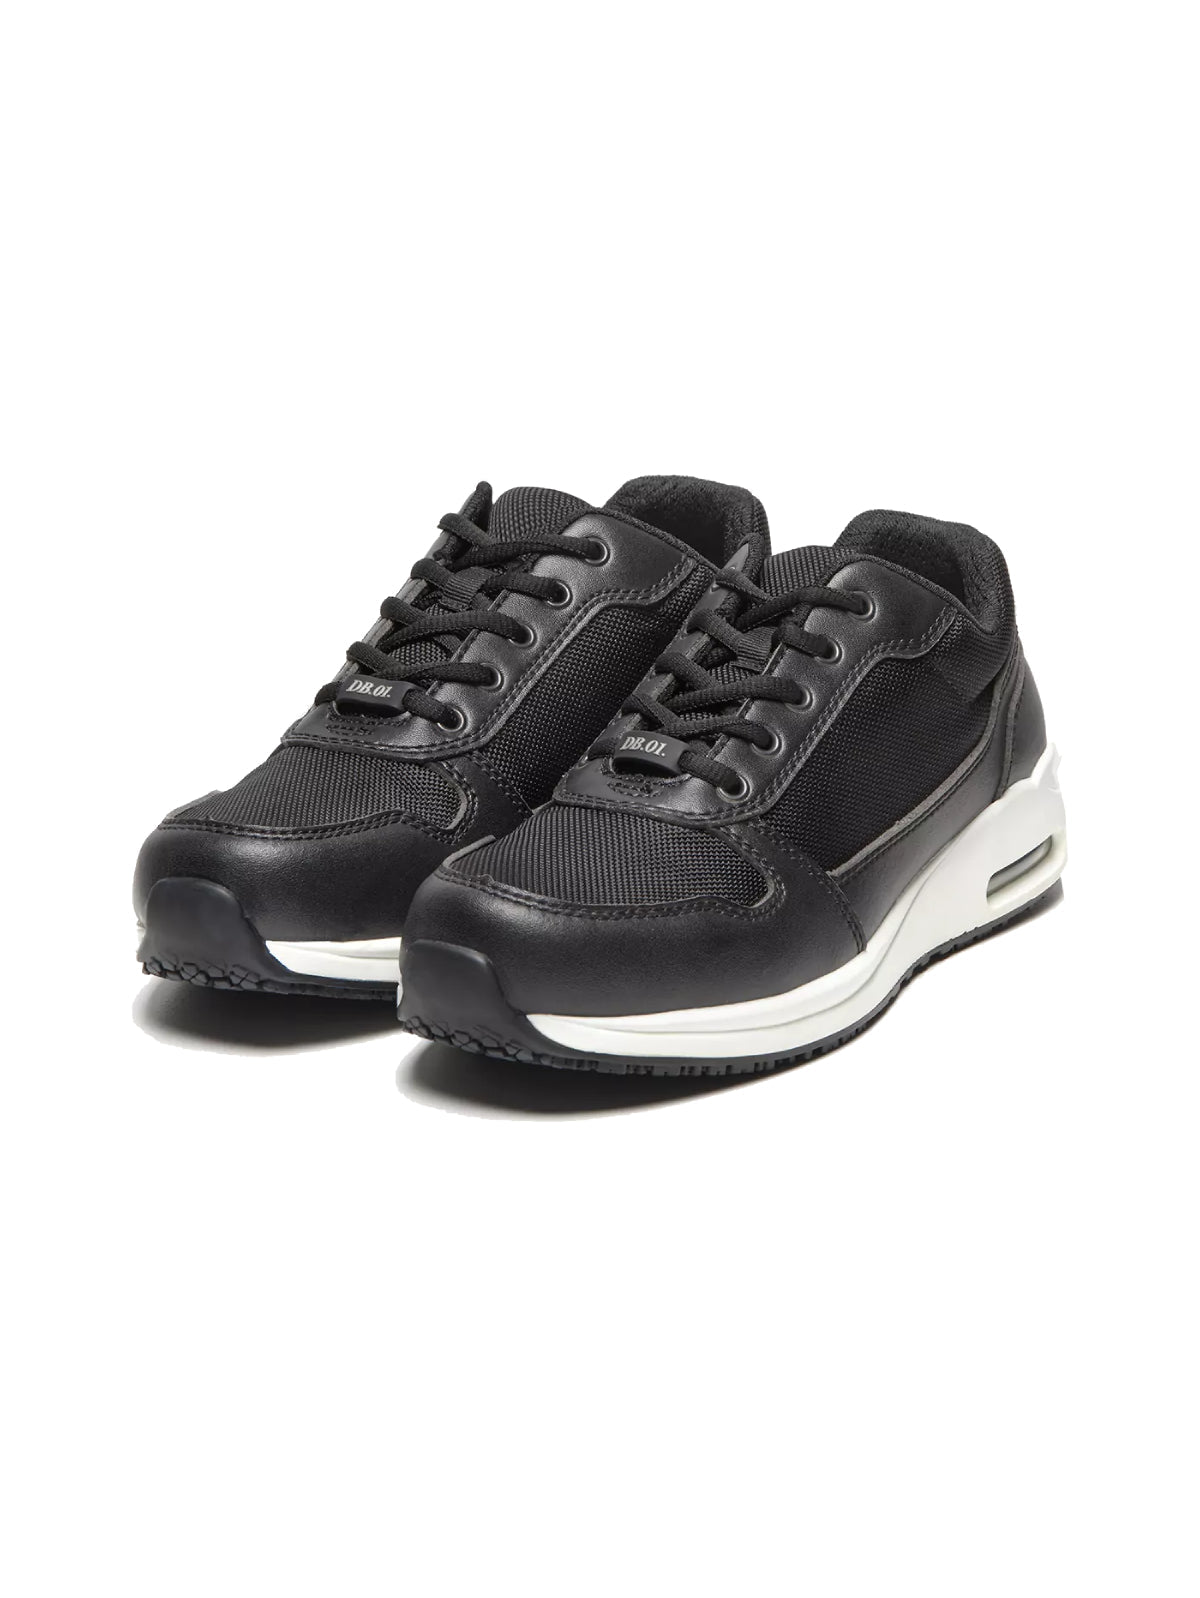 Work Sneaker DB.01 Black & White by New -  ChefsCotton